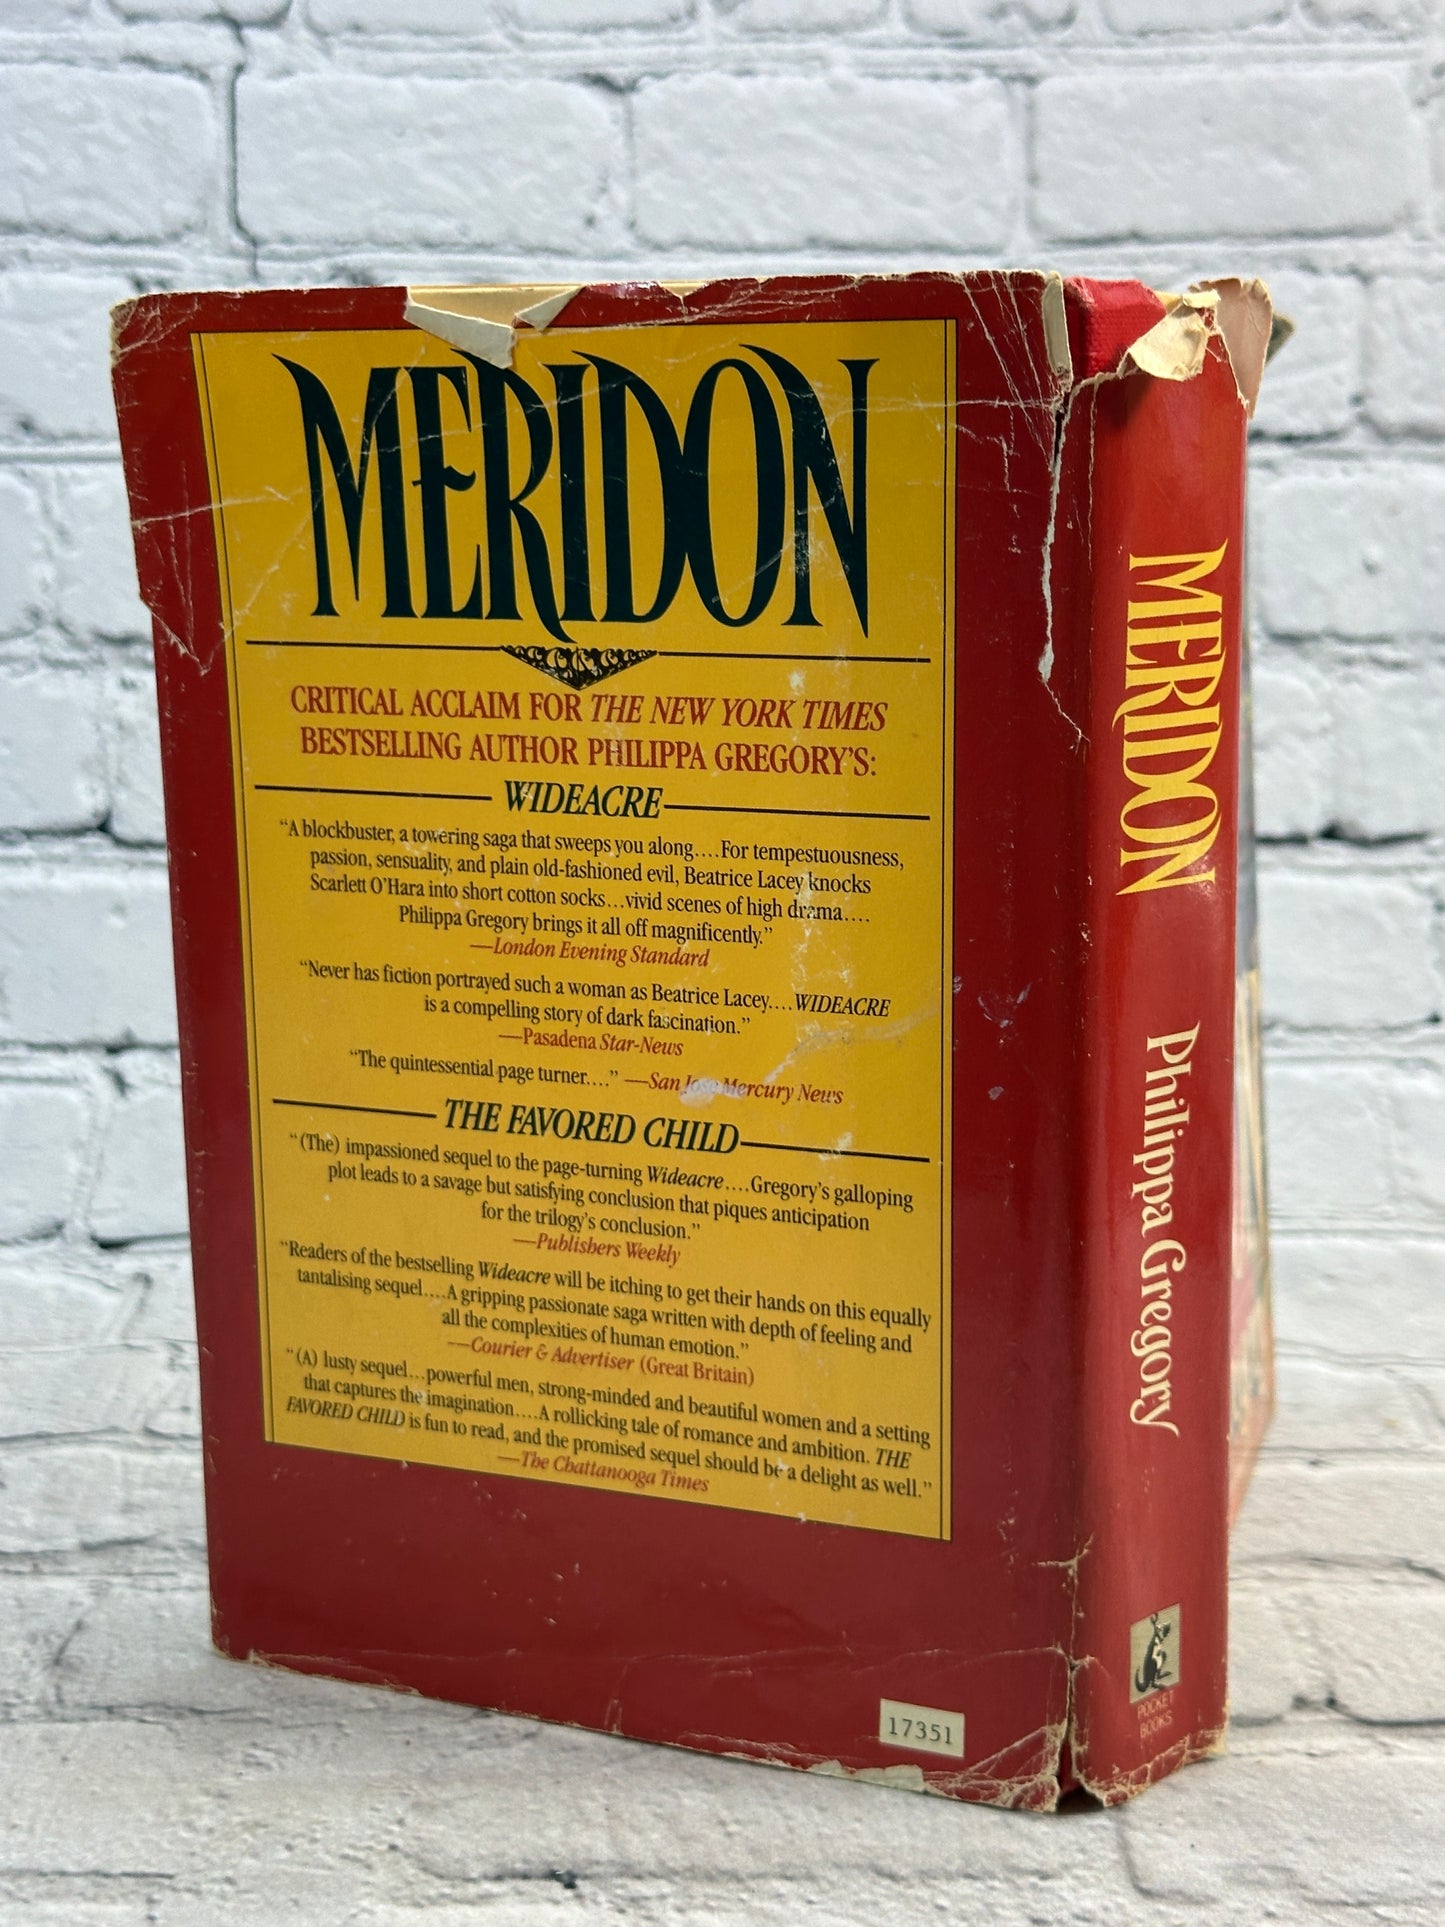 Meridon by Philippa Gregory [1990]